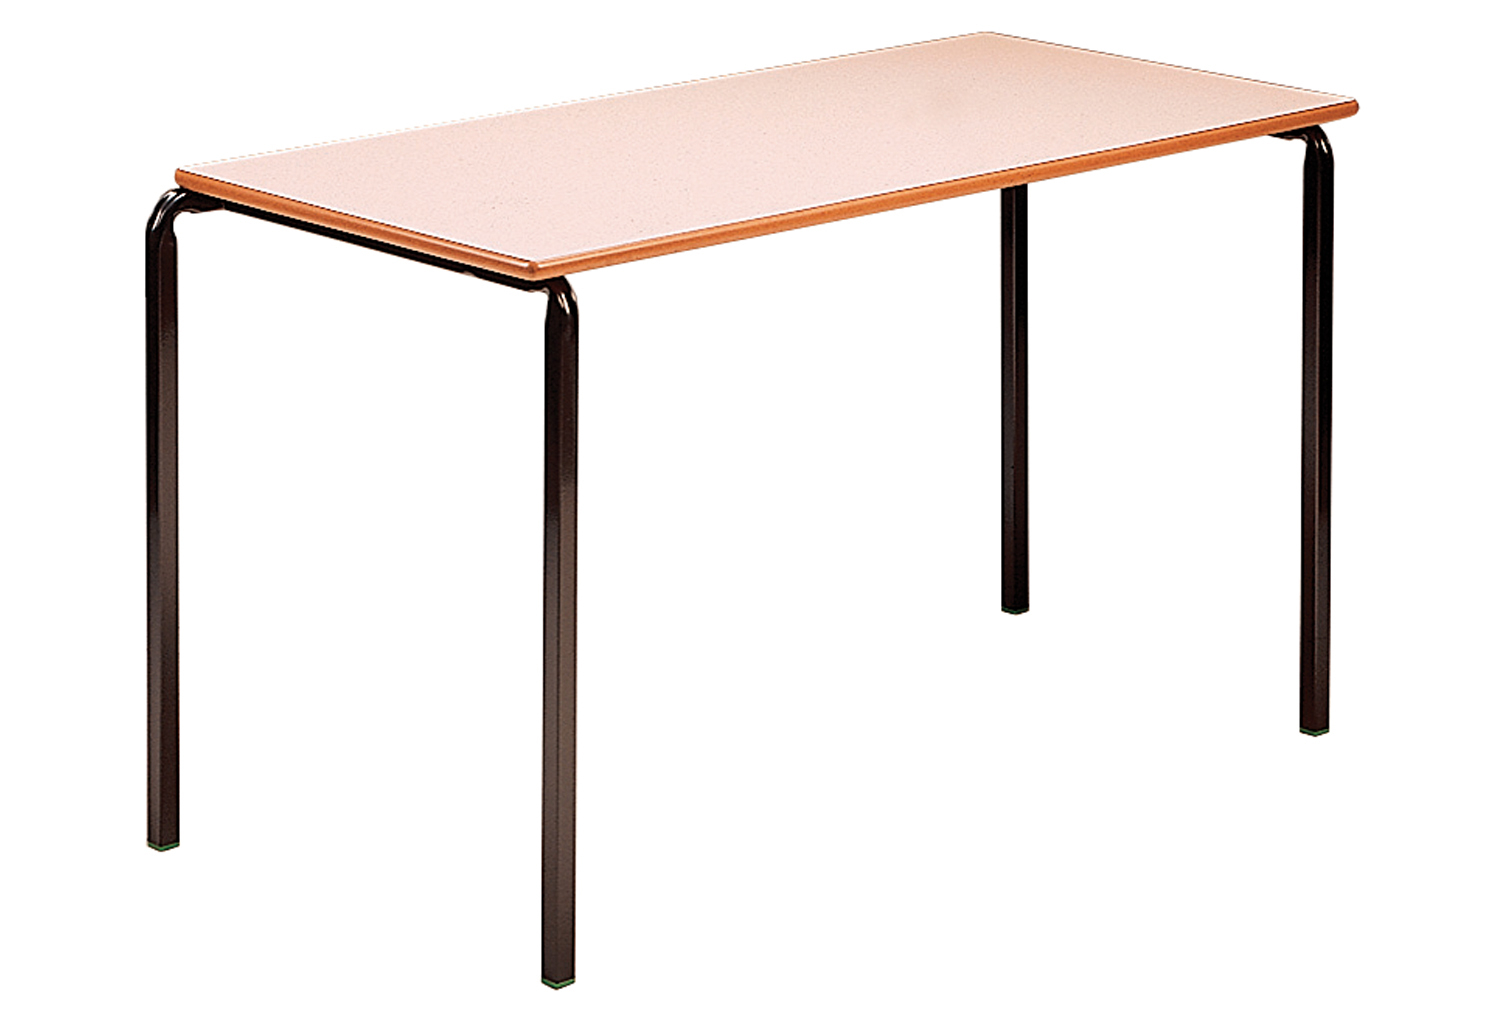 Rectangular Crush Bent Classroom Tables 14+ Years